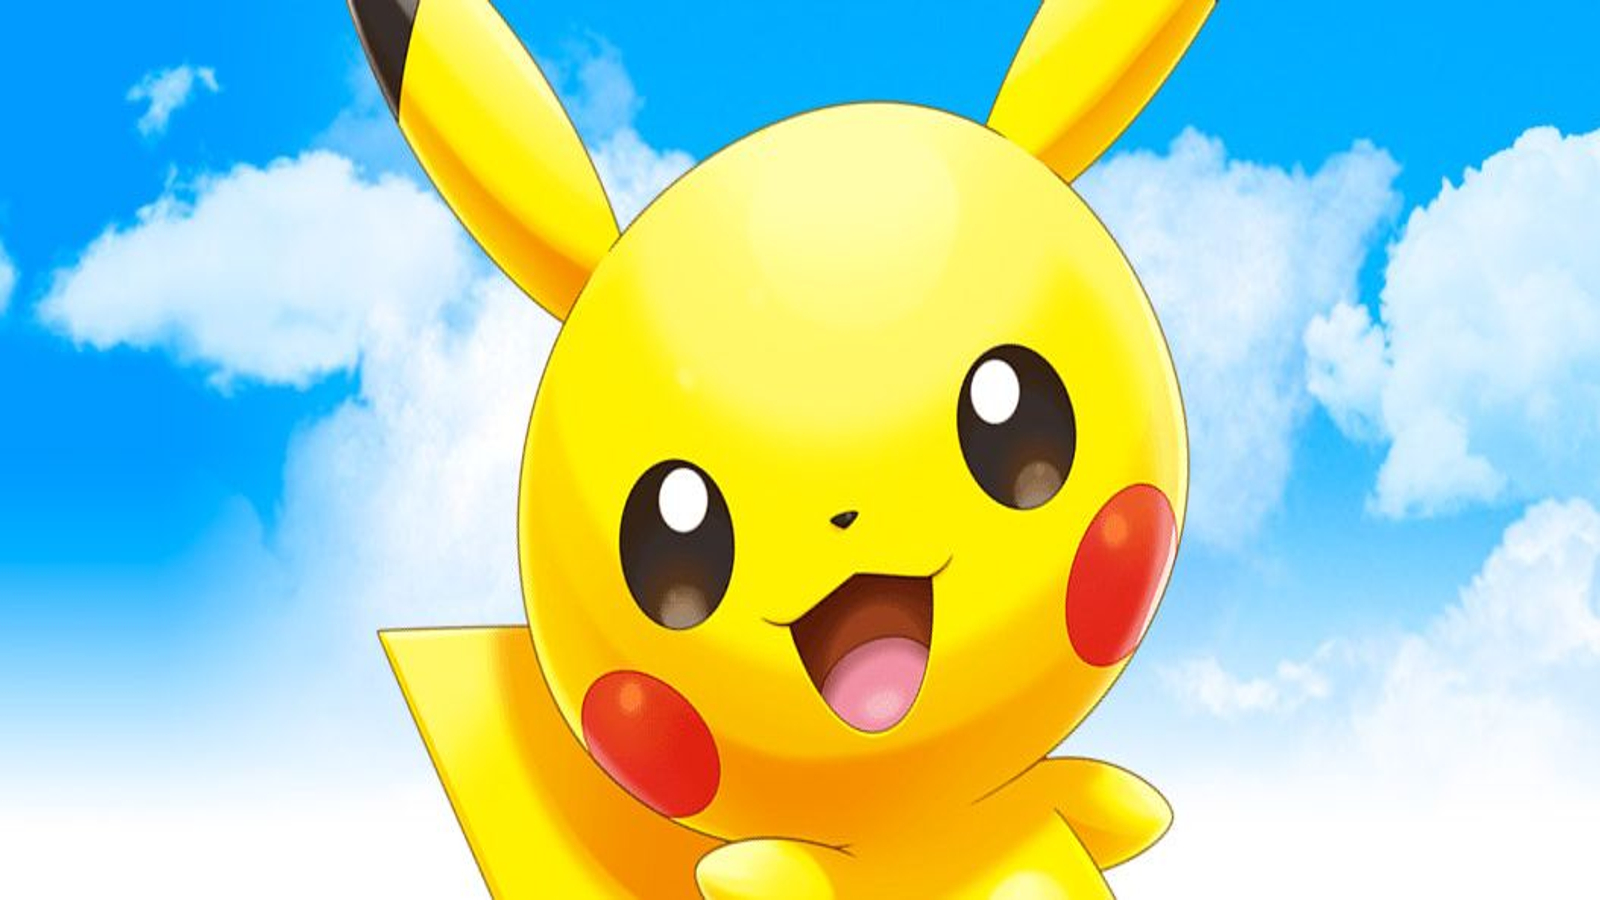 PokéLand - Official mobile action RPG based on Pokémon revealed